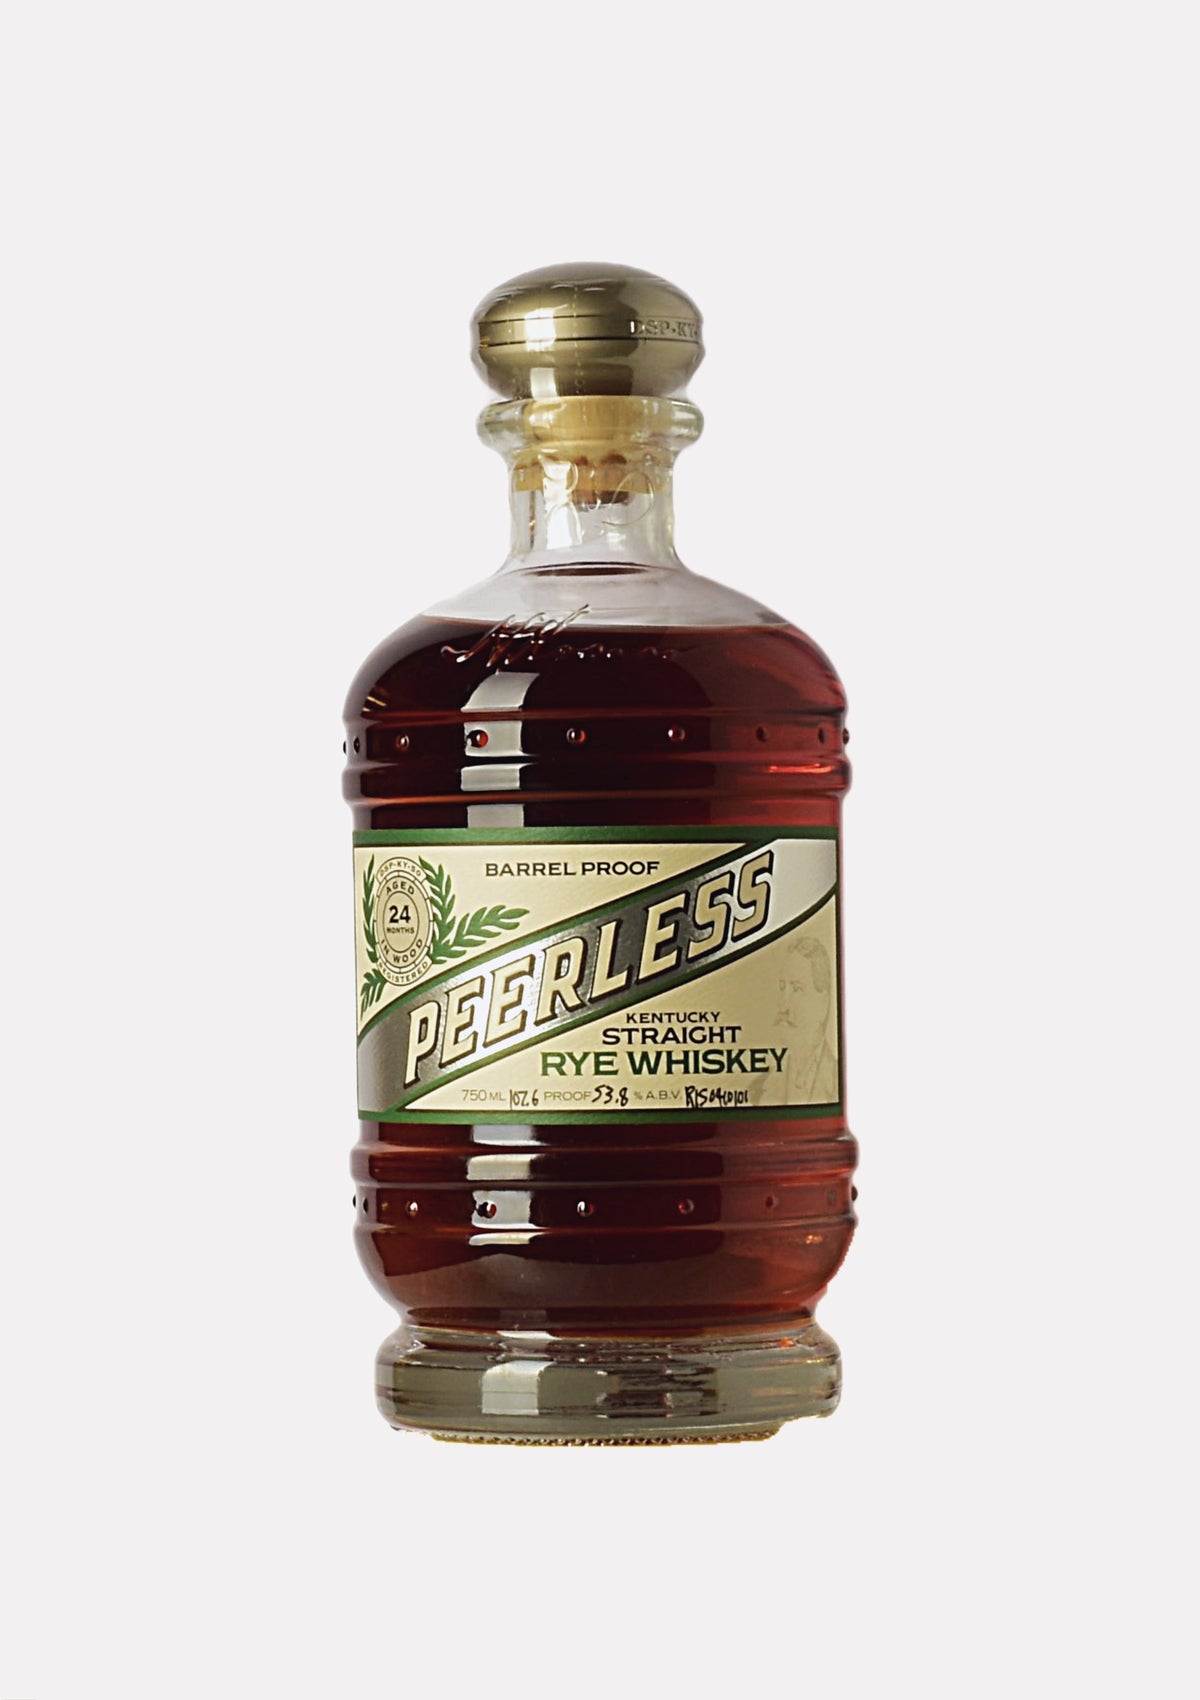 Peerless Barrel Proof Ryw Whiskey